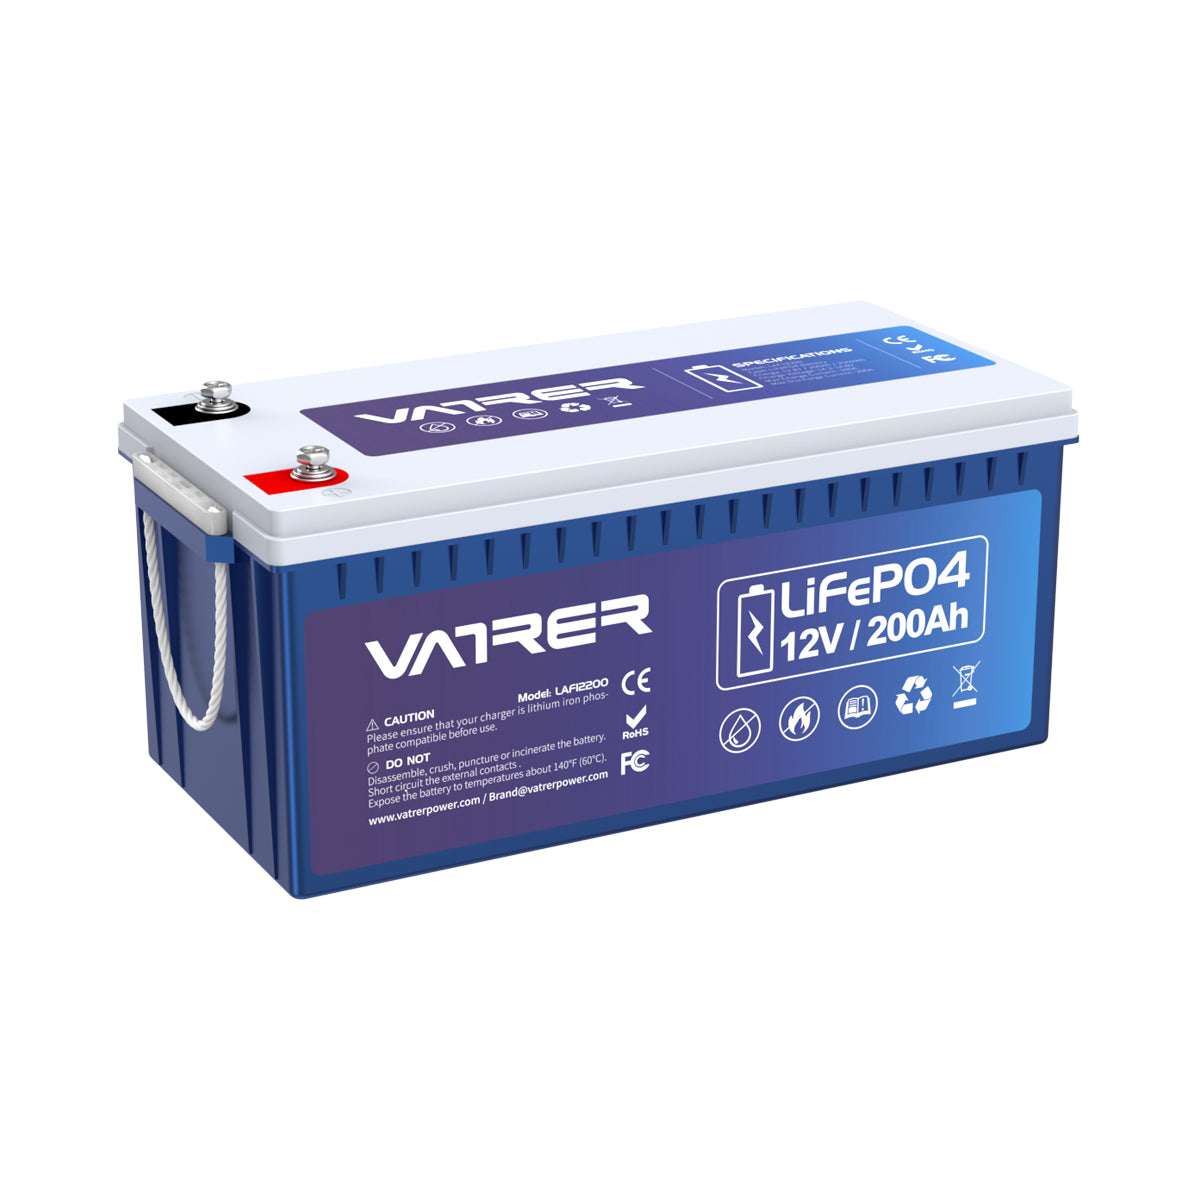 <tc>Vatrer</tc> 12 V 200 Ah LiFePO4-Lithiumbatterie, integriertes 100 A BMS und LiFePO4-Batterien mit Abschaltung bei niedriger Temperatur